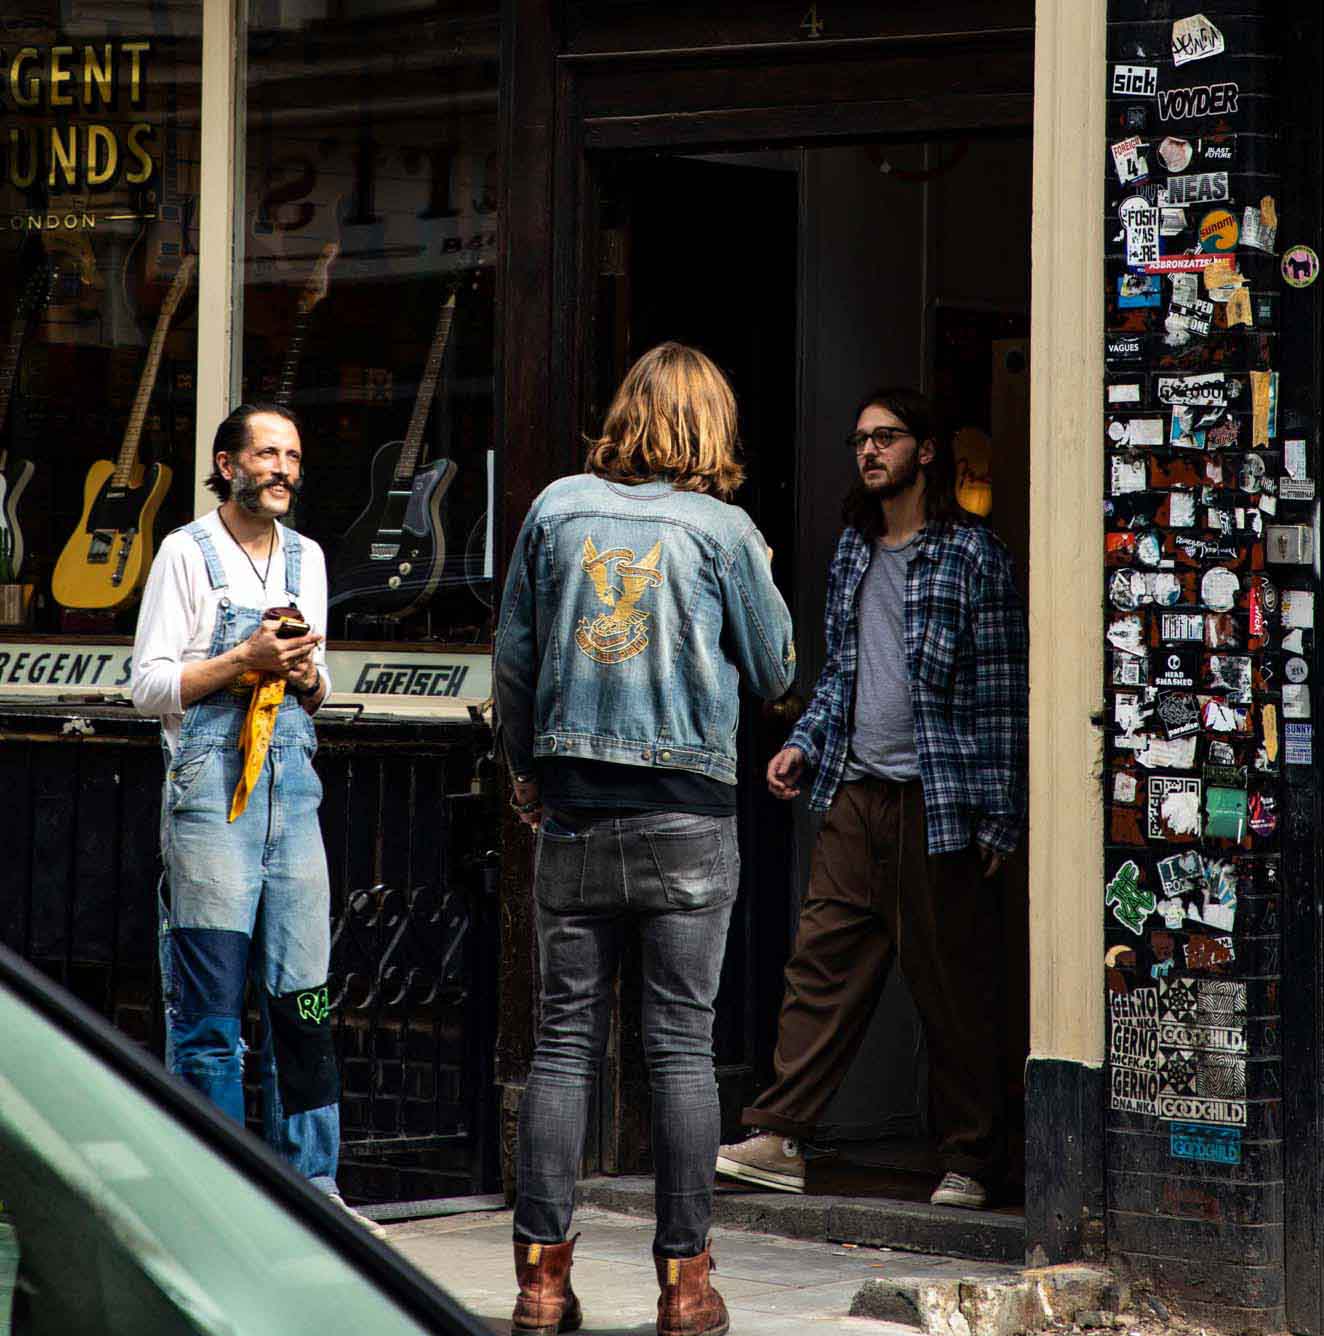 Photo outside a guitar shop on Denmark Street